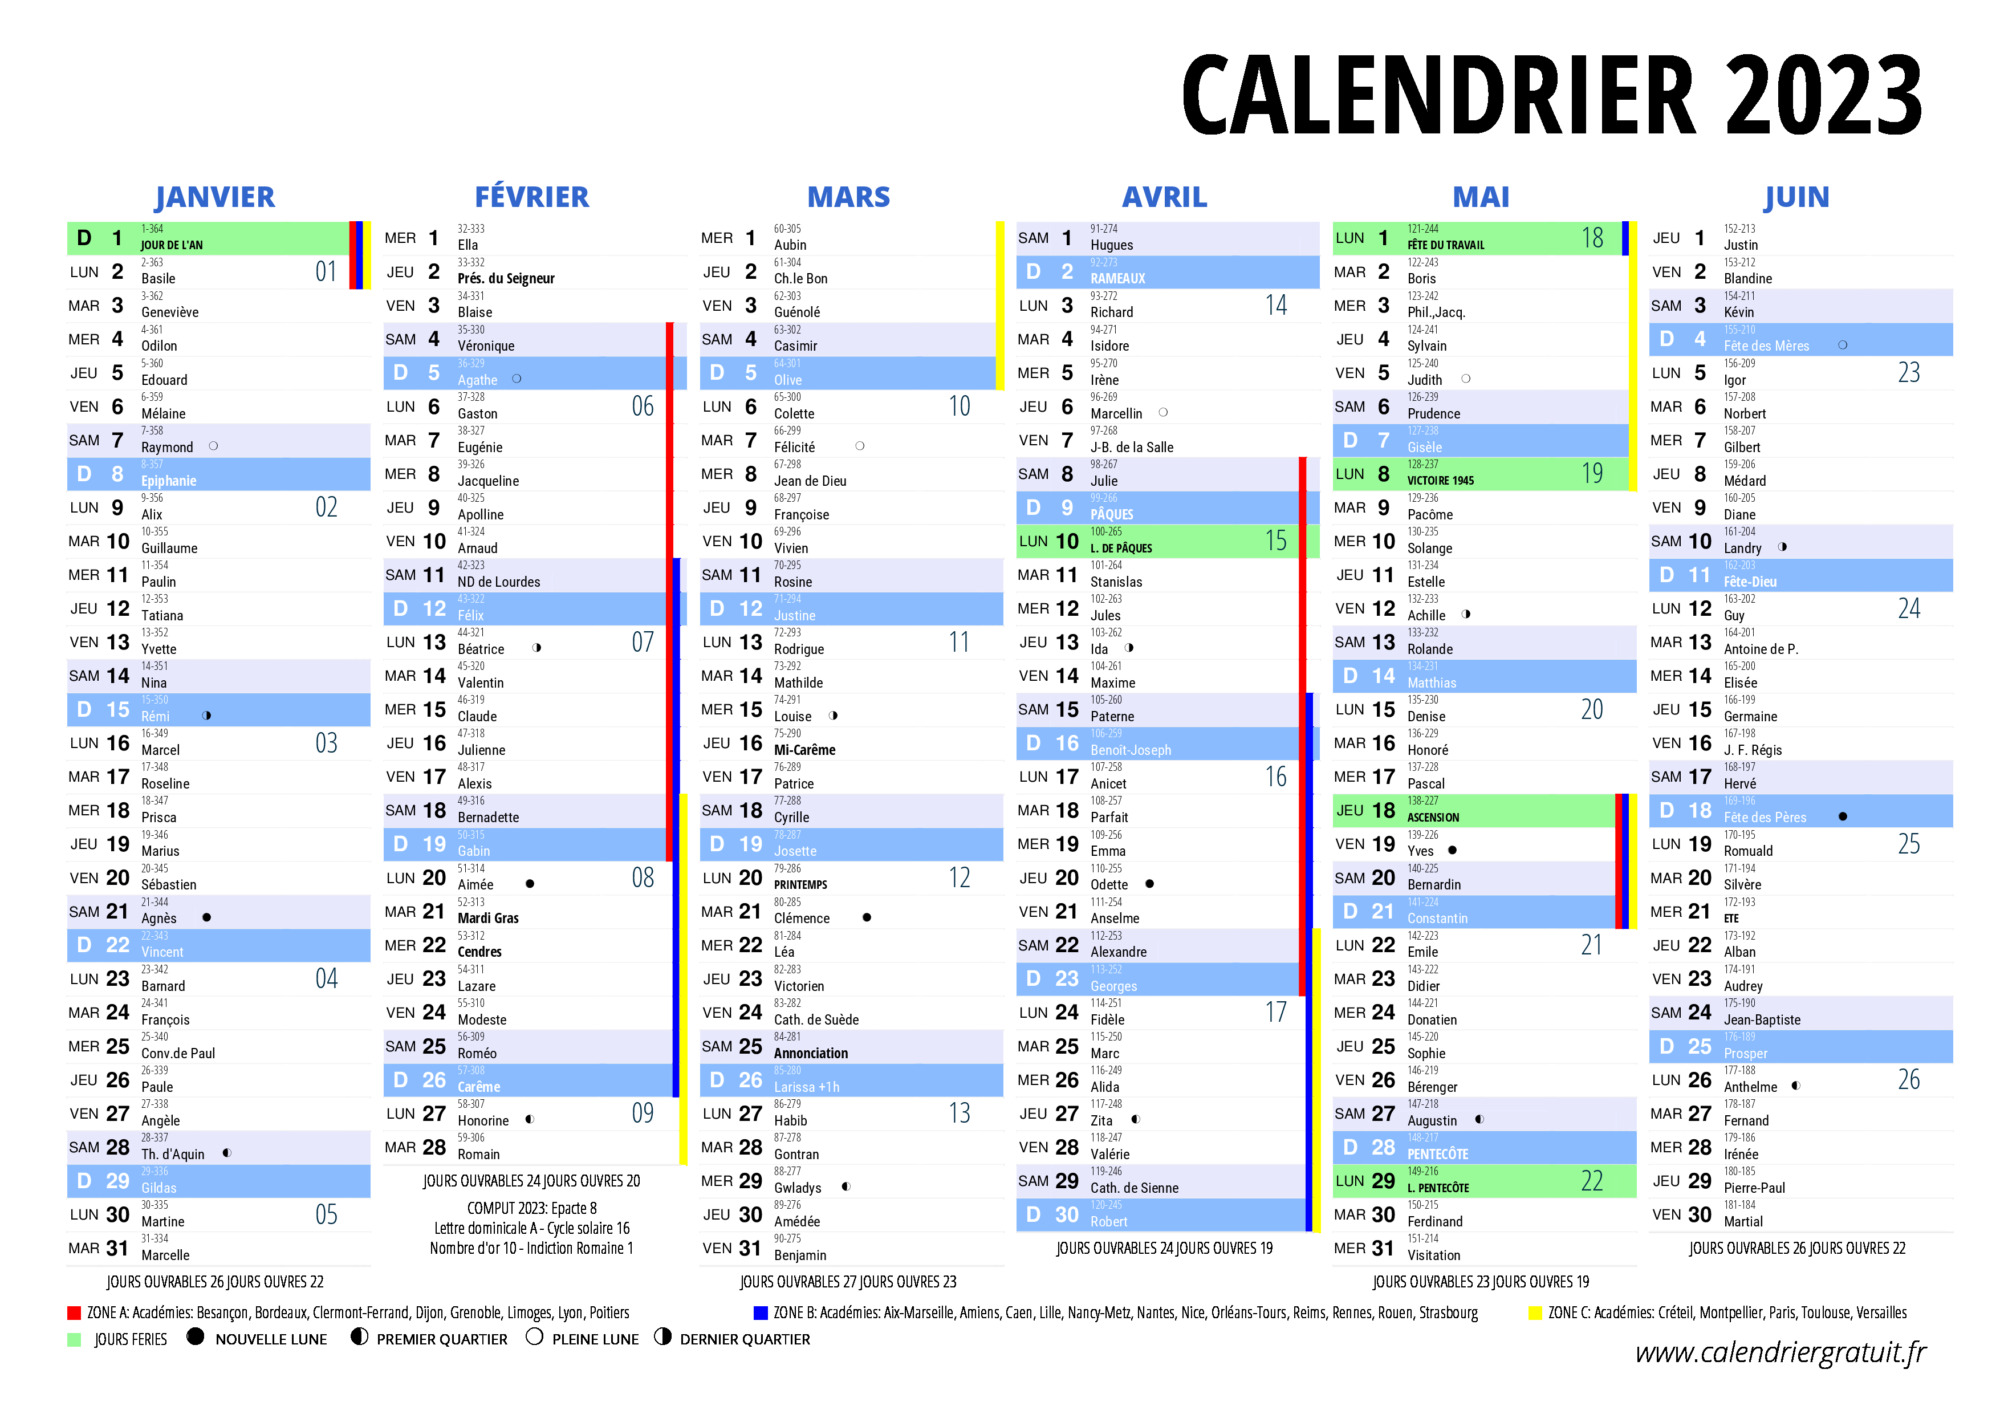 Planning calendrier de la famille 2023/2024 grand format